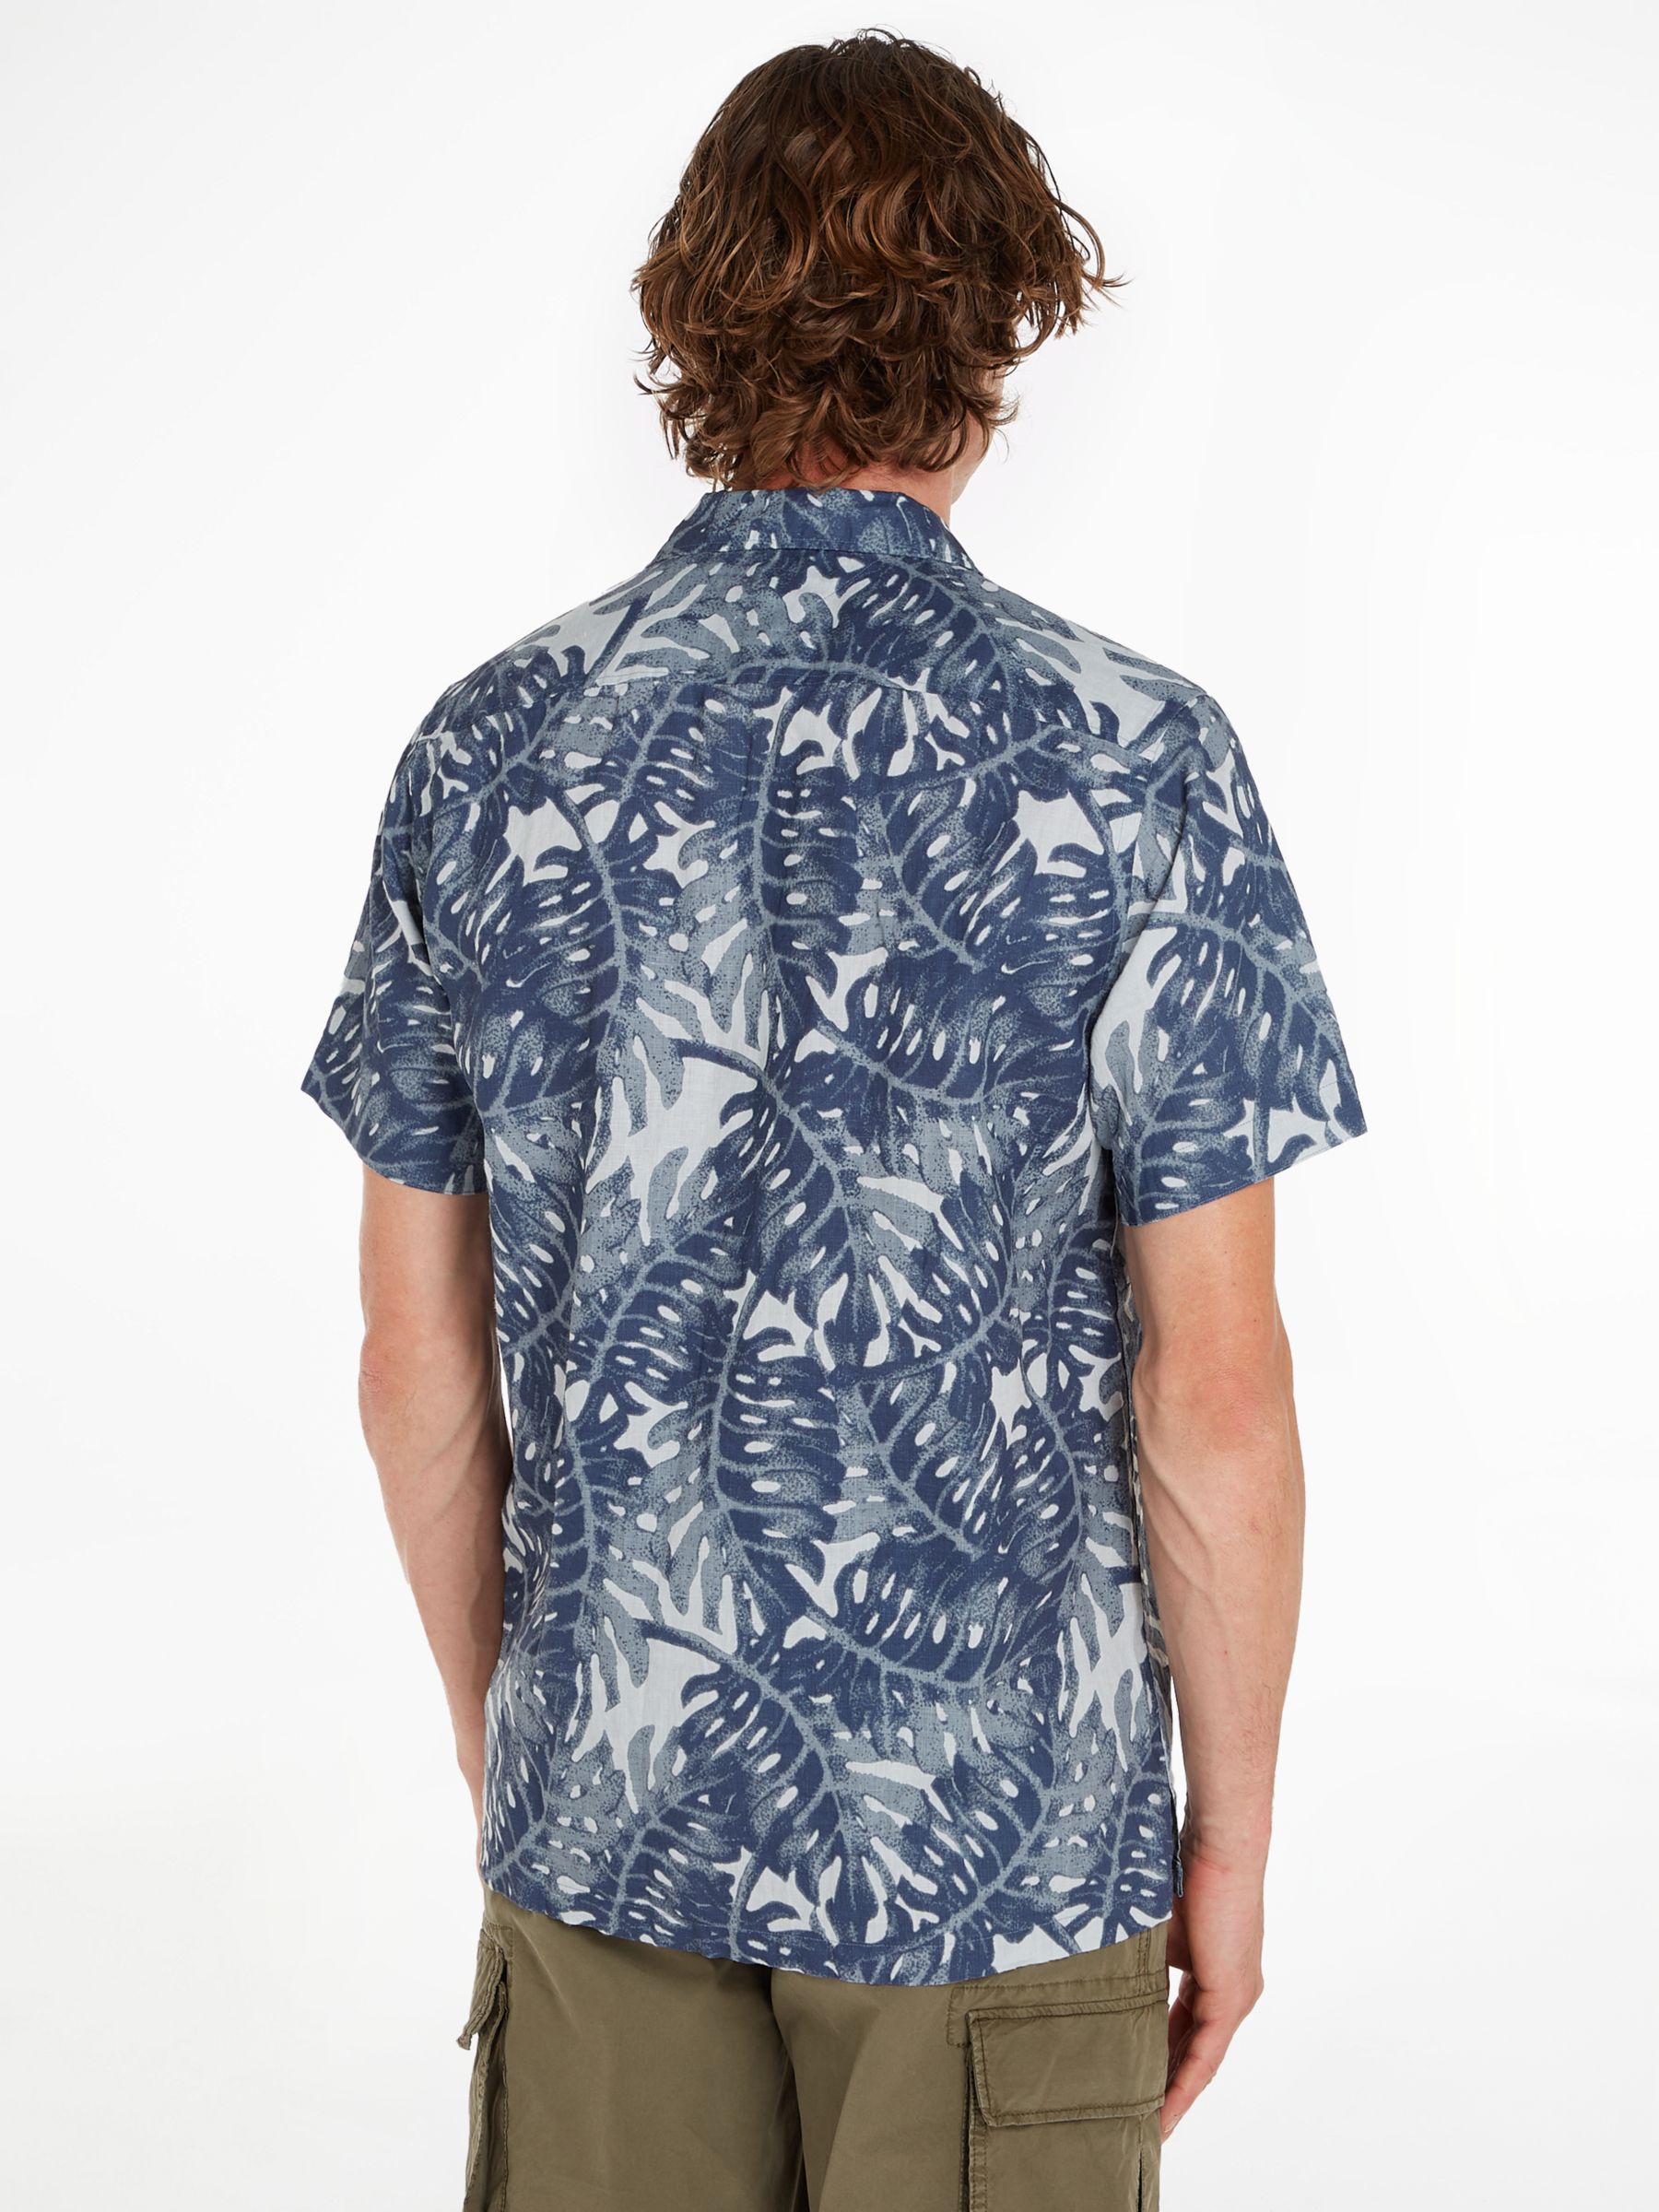 Tommy Hilfiger Foliage Printed Linen Short Sleeve Shirt, Basic Navy/Multi, M